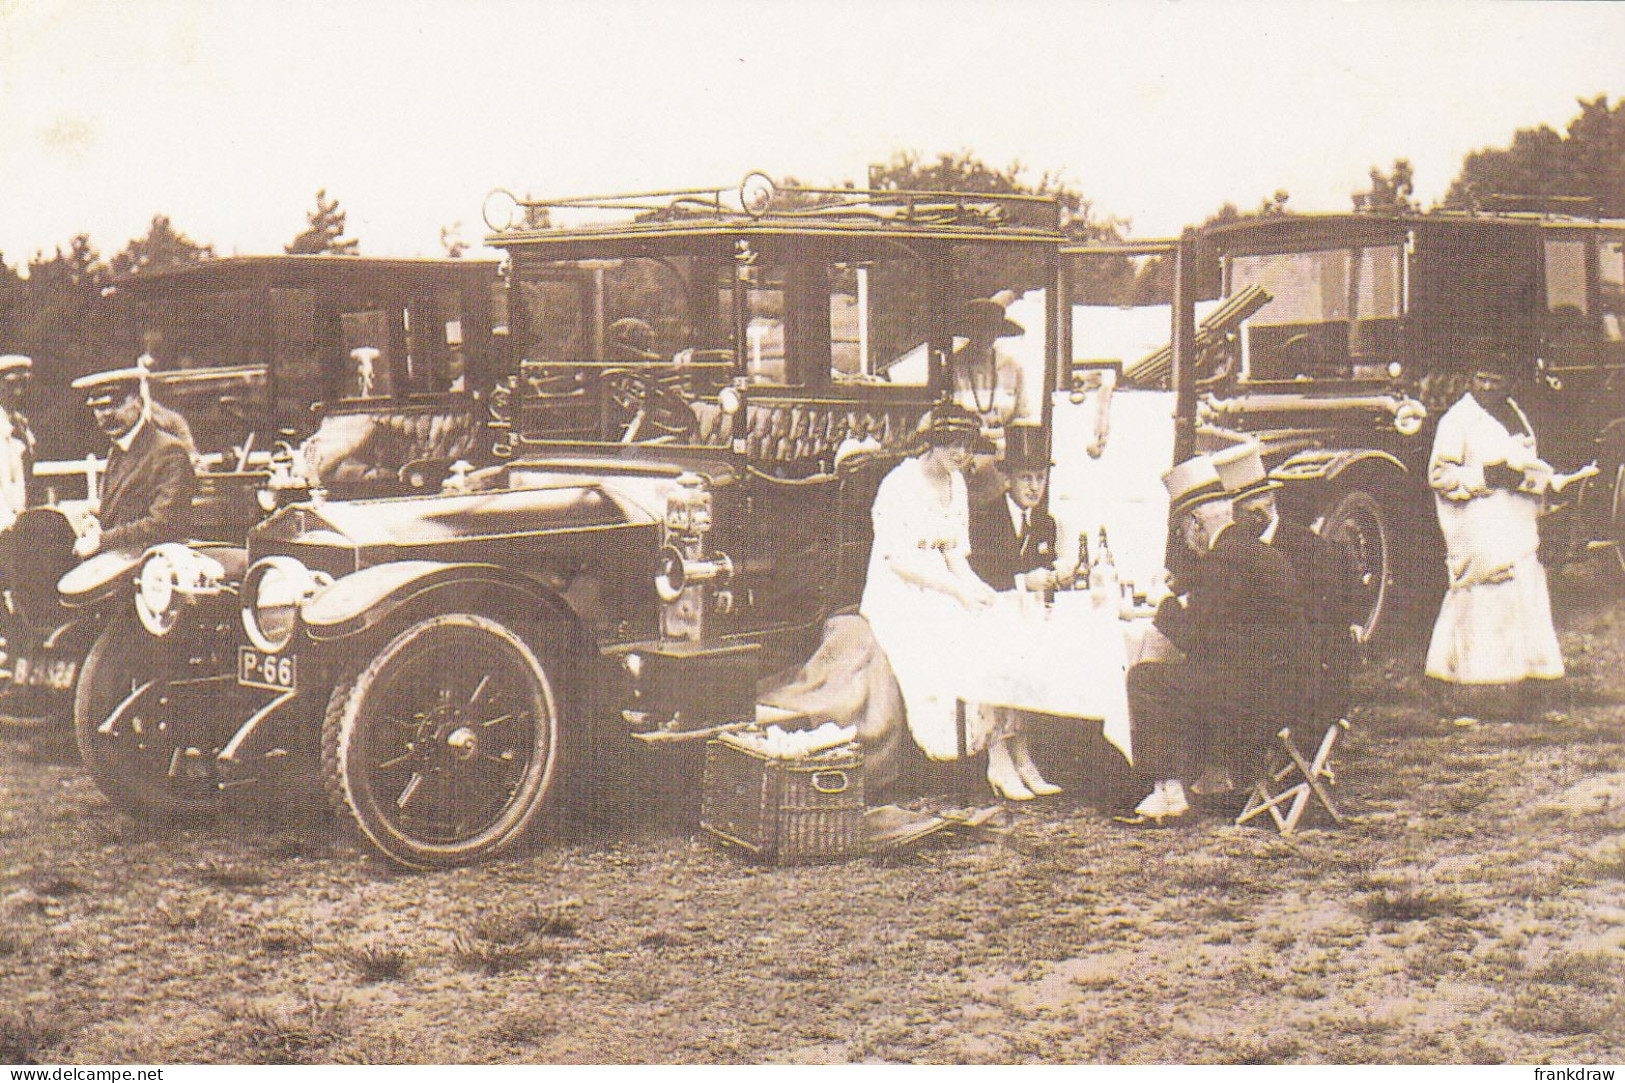 Nostalgia Postcard - Royal Ascot, June 1921  - VG - Ohne Zuordnung